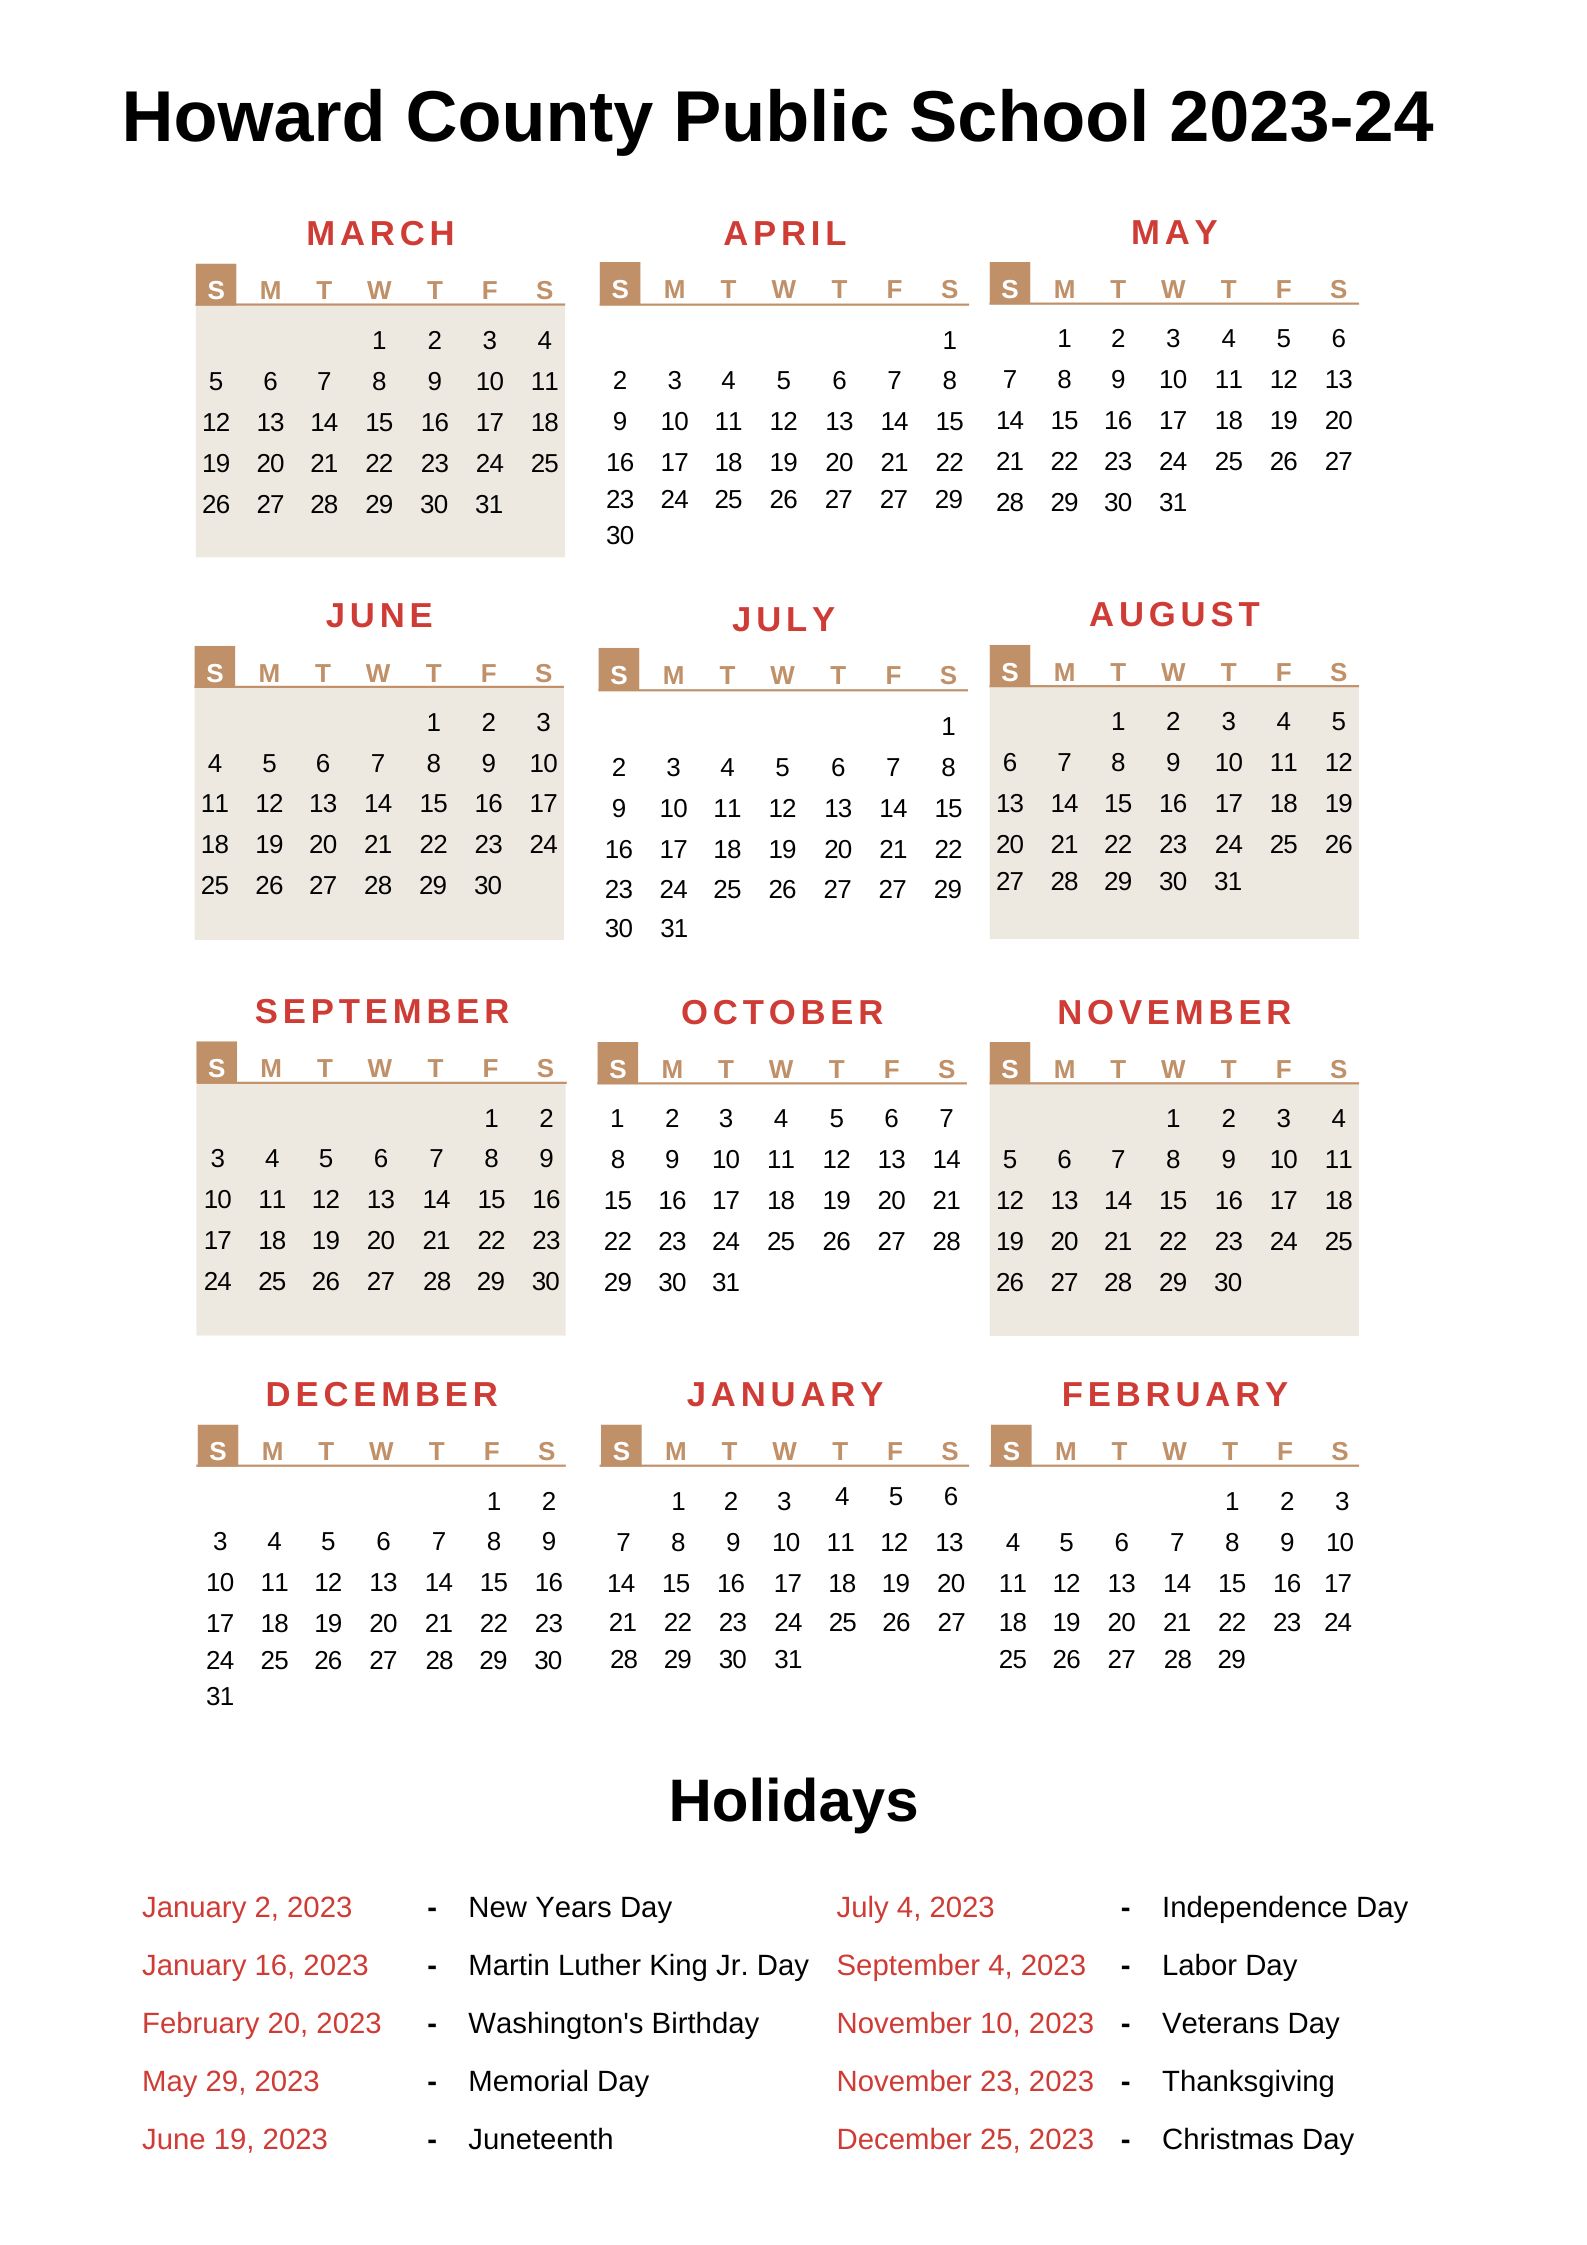 Howard County Public Schools Calendar 202324 With Holidays